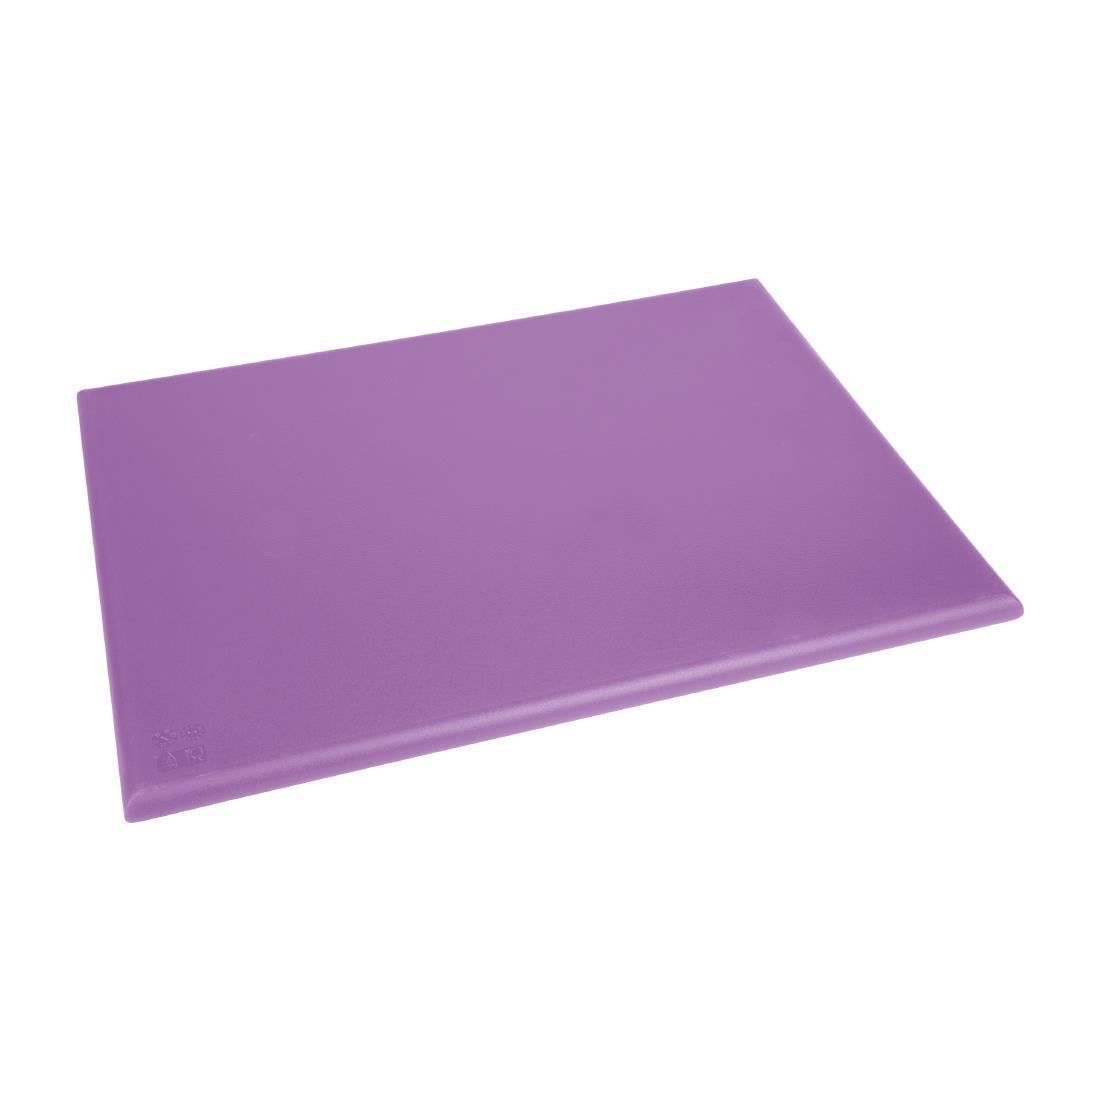 FX104 Hygiplas High Density Chopping Board Purple - 600x450x25mm JD Catering Equipment Solutions Ltd